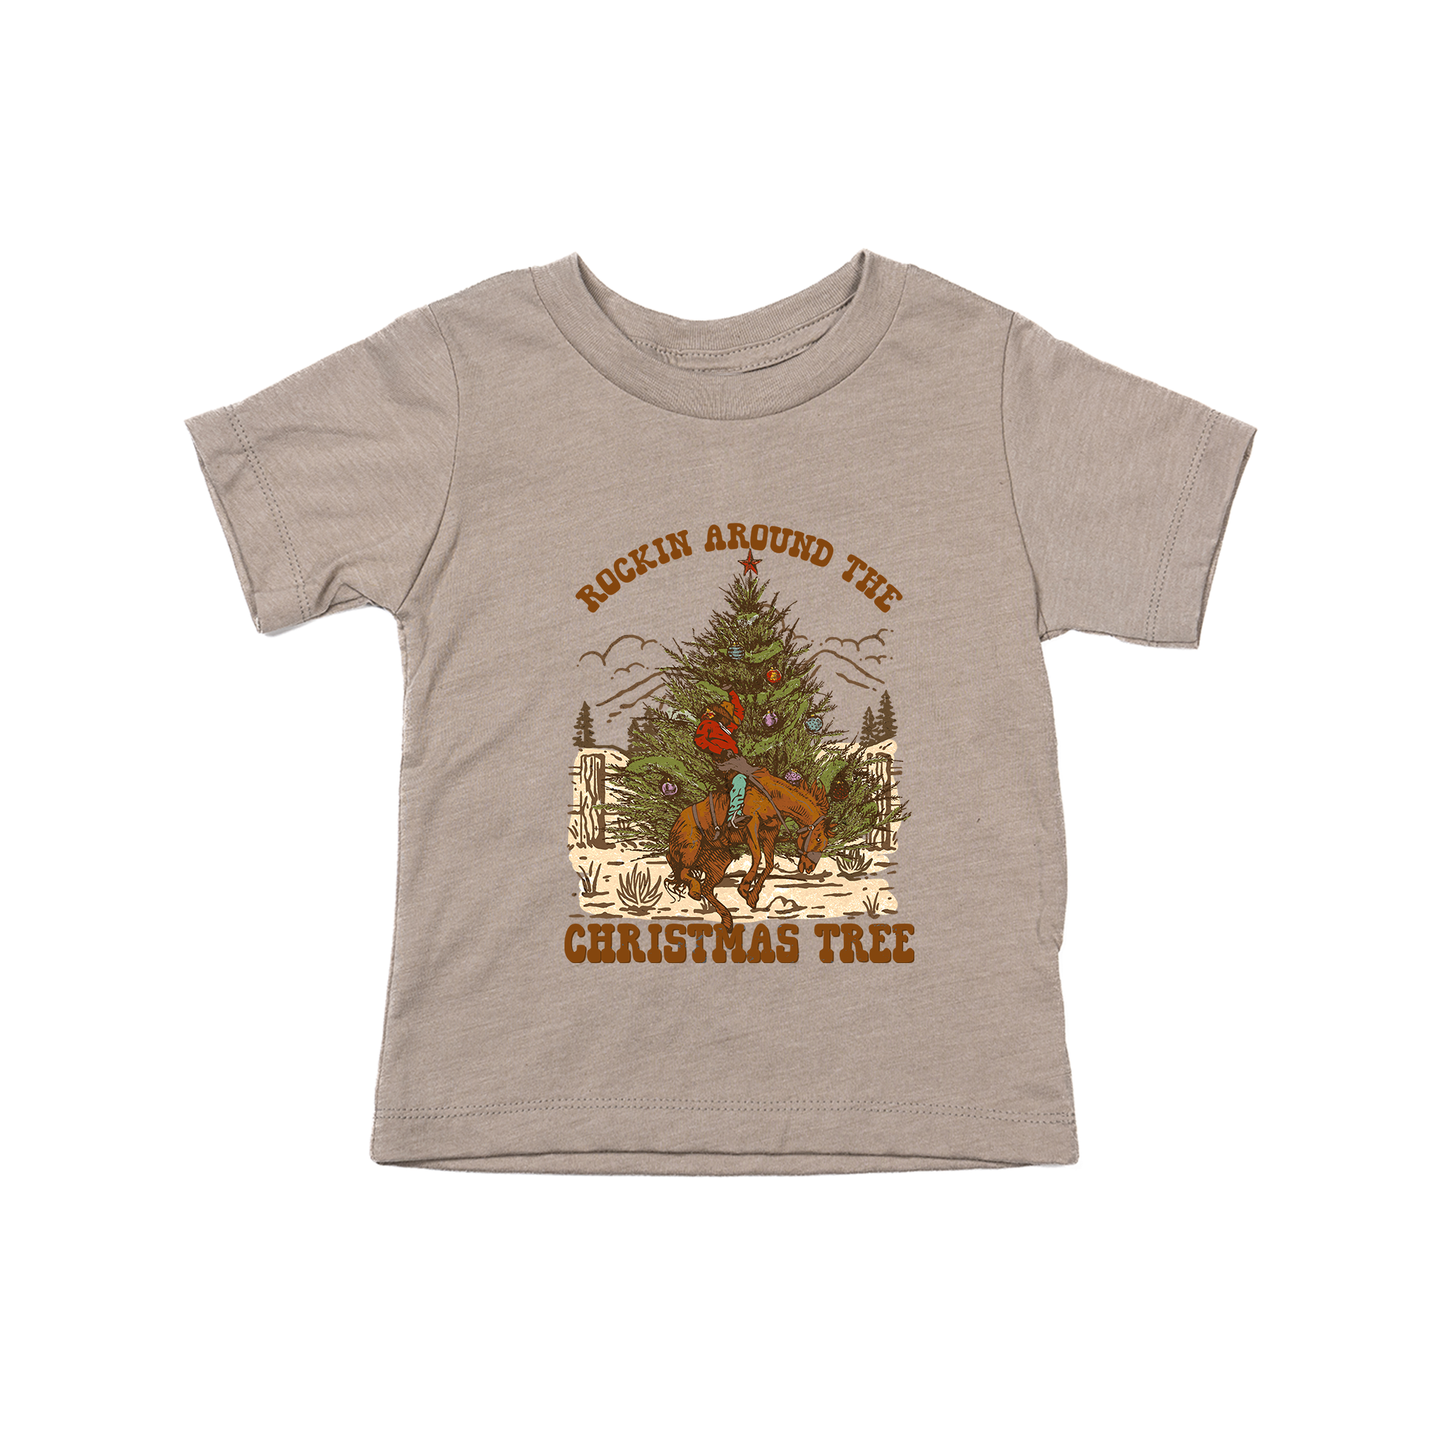 Rockin' Around The Christmas Tree (Rodeo) - Kids Tee (Pale Moss)